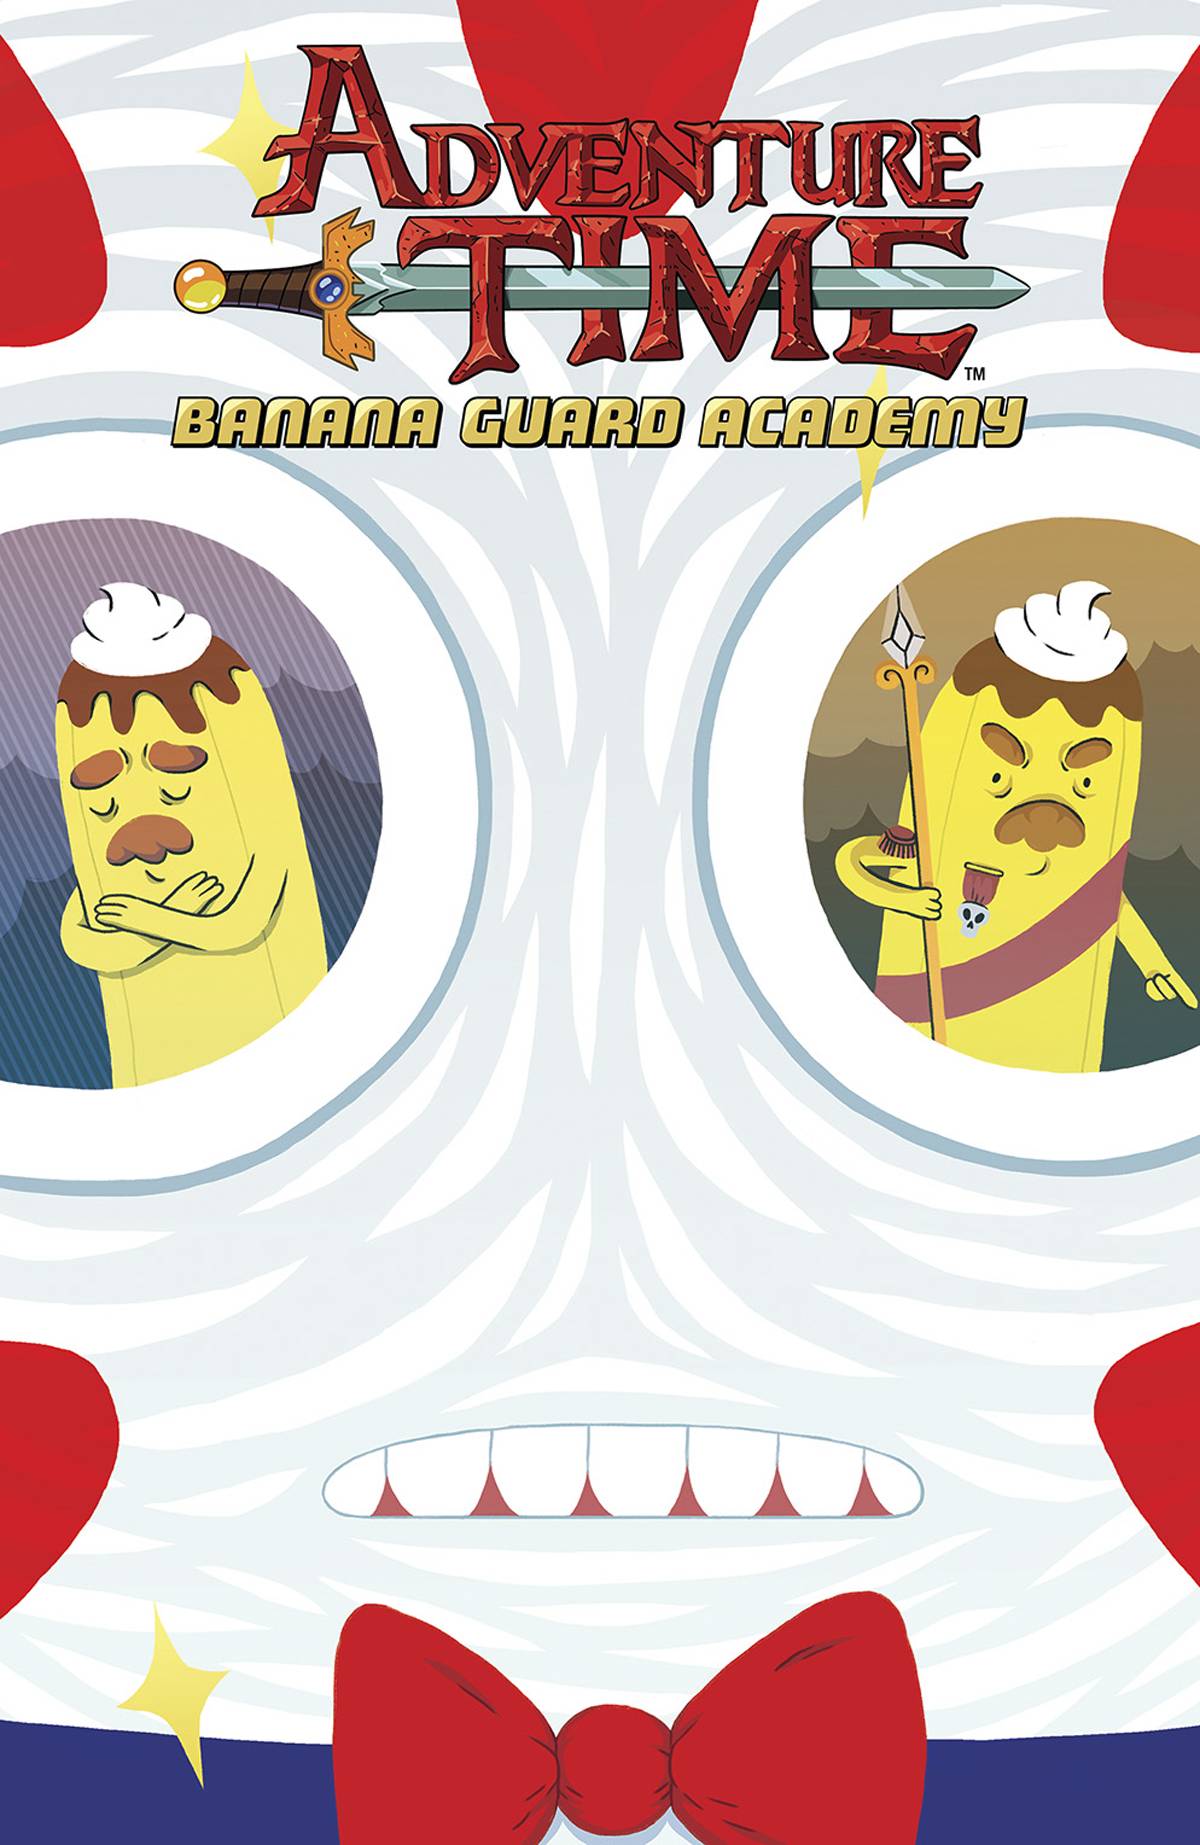 Adventuretime Banana Guard Academy #5 Main Covers